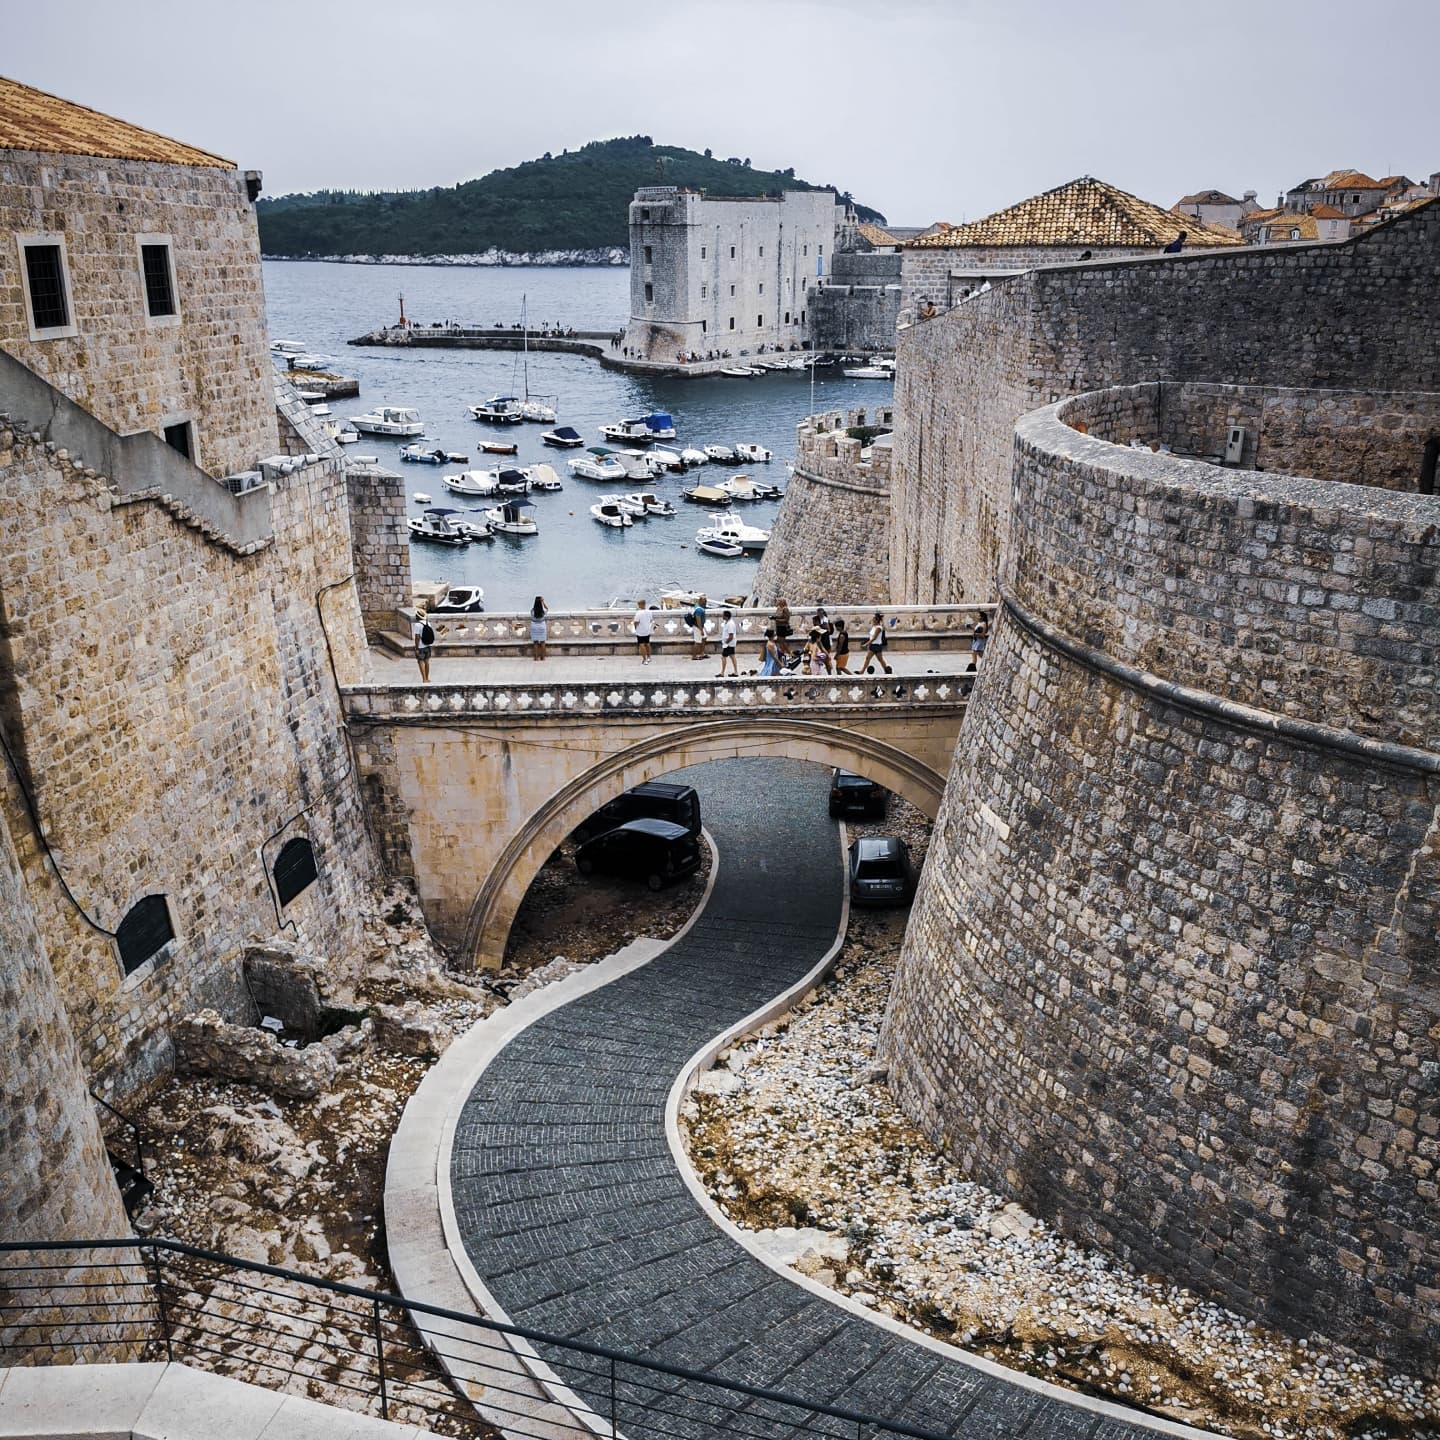 Game of Thrones filming location -Ploce Gate in Dubrovnik, Croatia